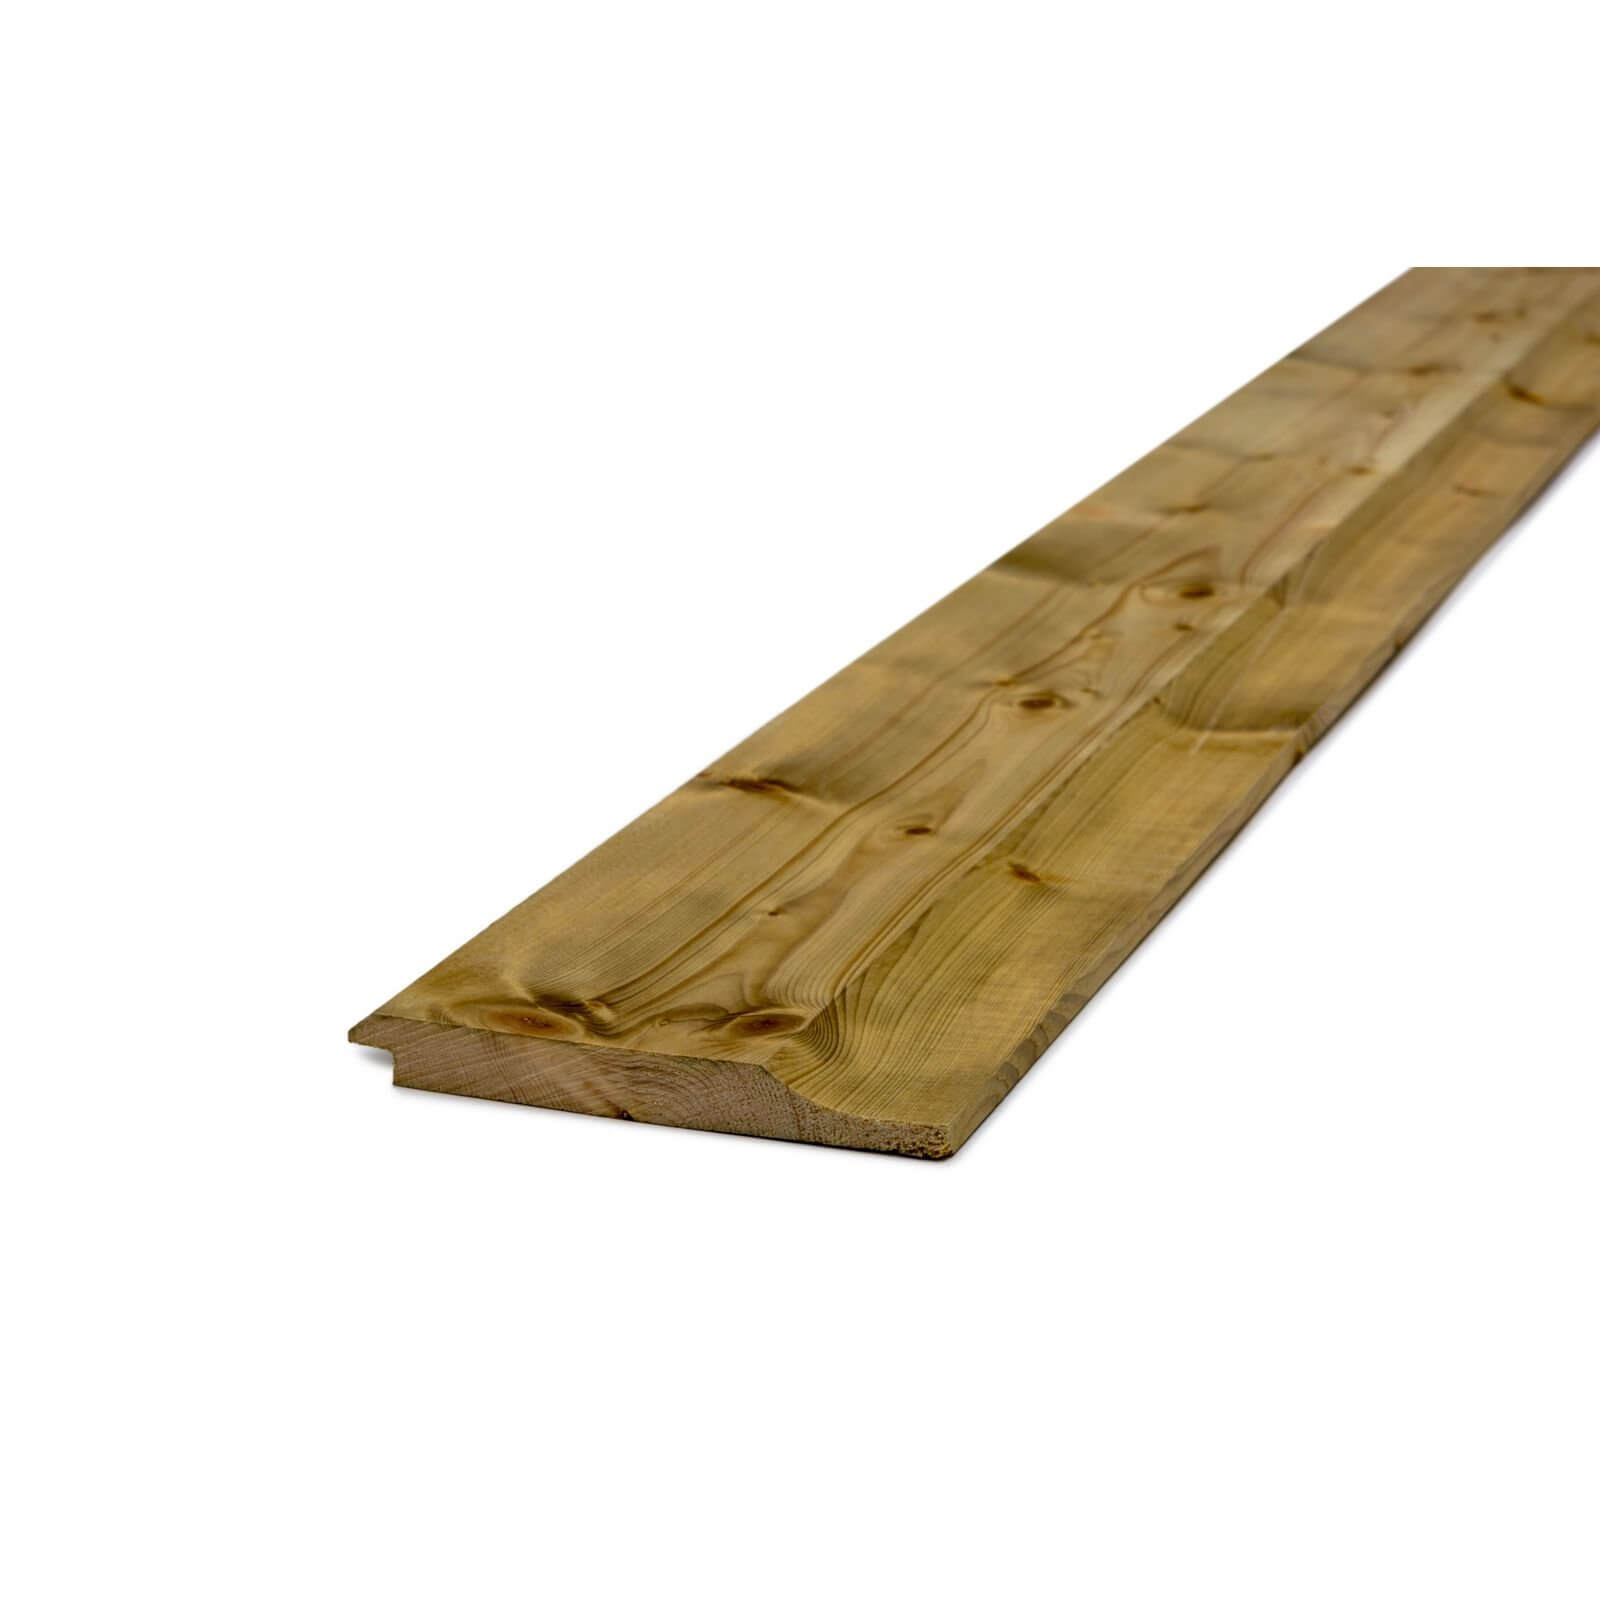 Metsa Wood Treated Shiplap Cladding 2.4m (2400 x 119 x 18mm) - Pack of 5